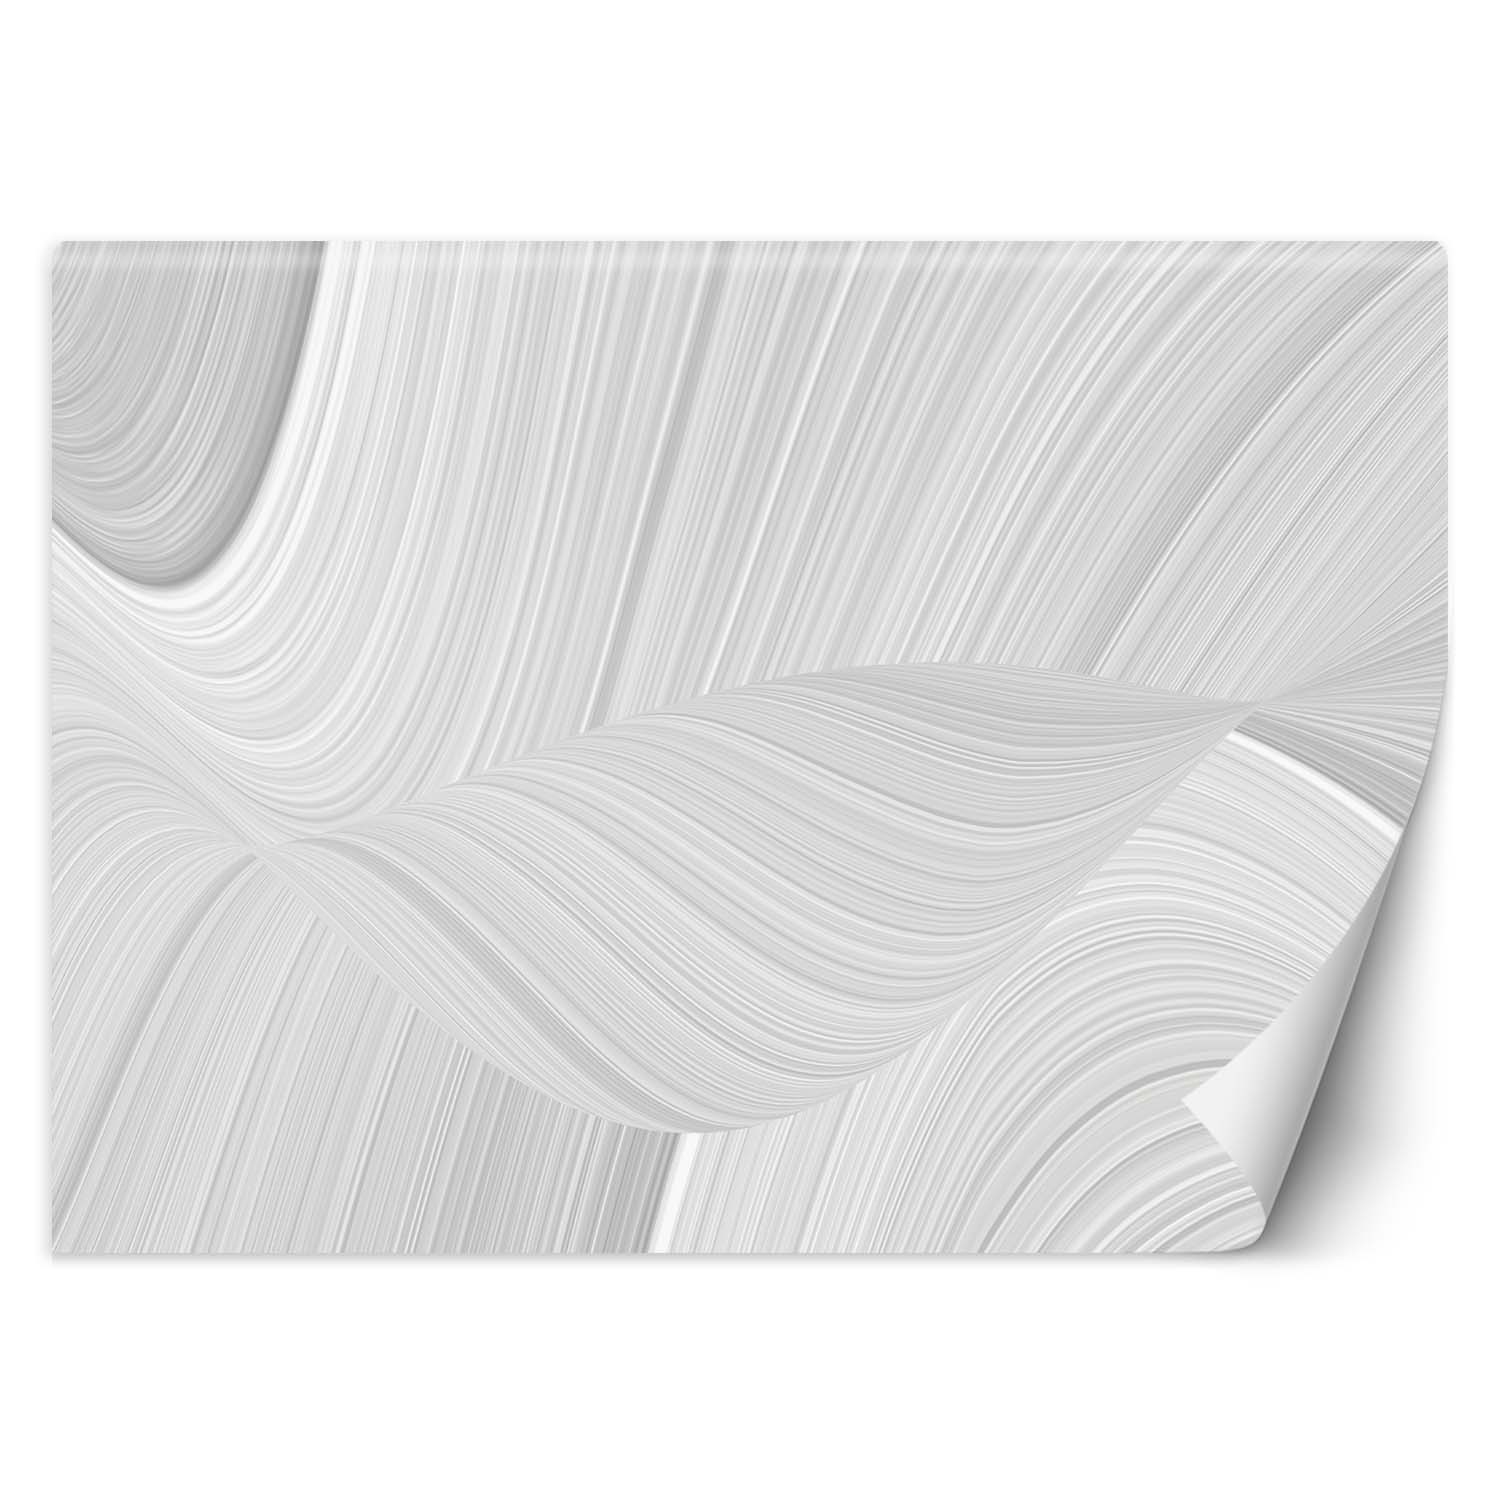 Trend24 – Behang – Texture Blur – Vliesbehang – Fotobehang 3D – Behang Woonkamer – 350×245 cm – Incl. behanglijm